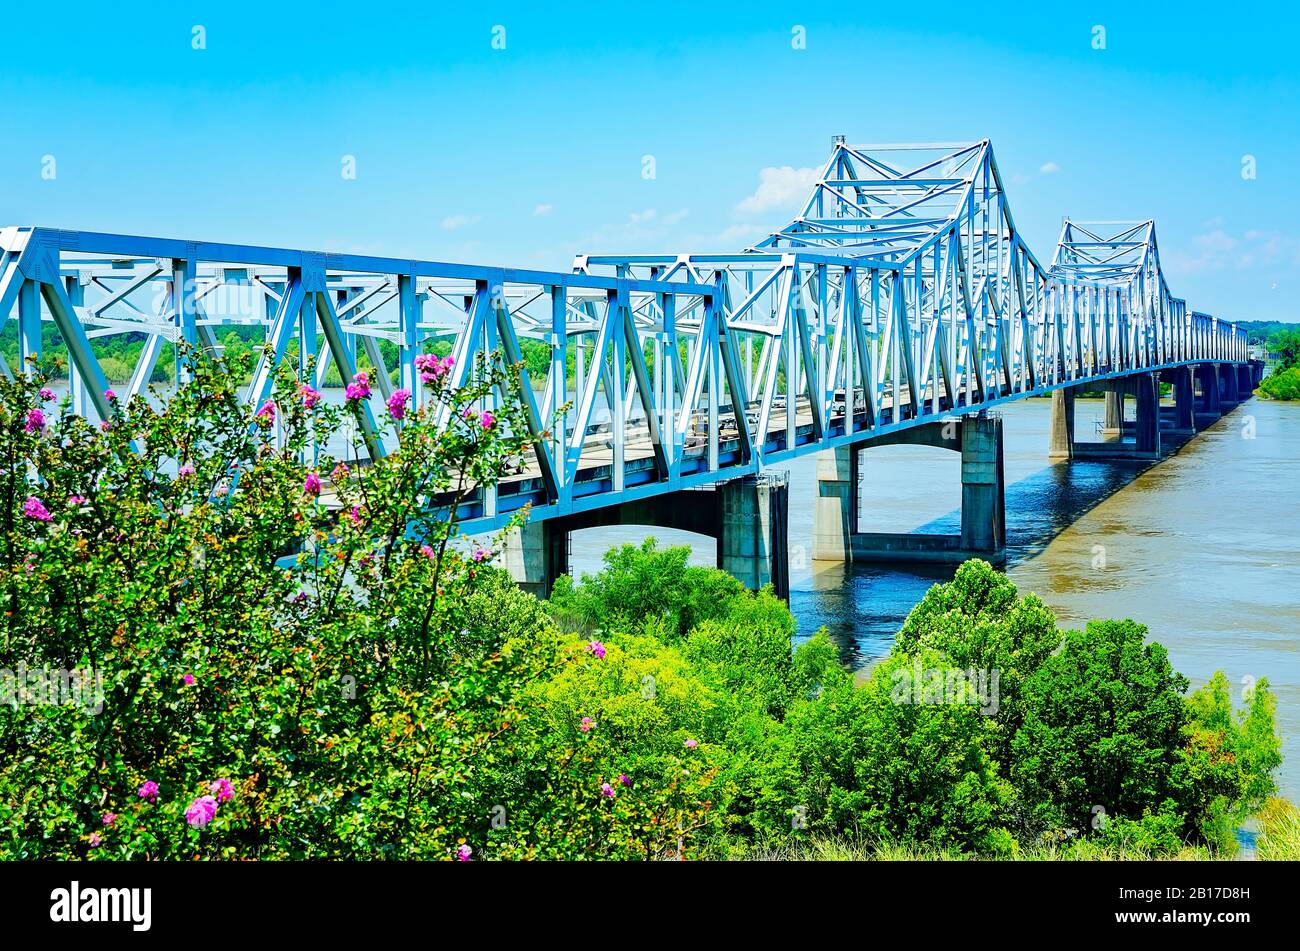 The Vicksburg Bridge, also known as the Mississippi River Bridge, spans the Mississippi River, July 26, 2019, in Vicksburg, Mississippi. Stock Photo